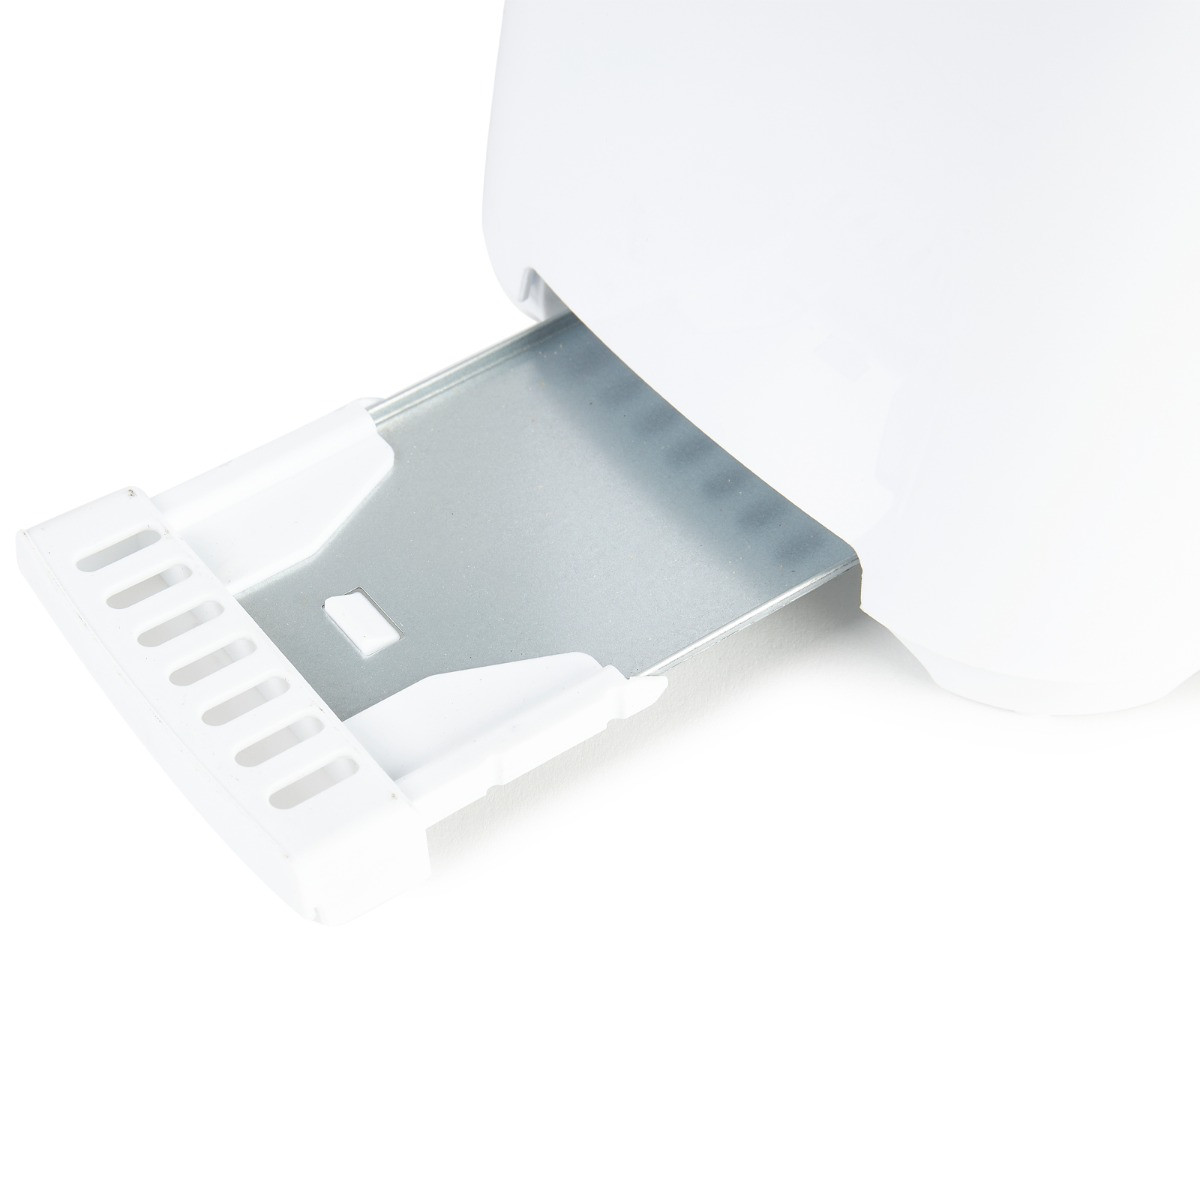 PIFCO Essentials Kettle & 2-Slice Toaster Bundle - White>